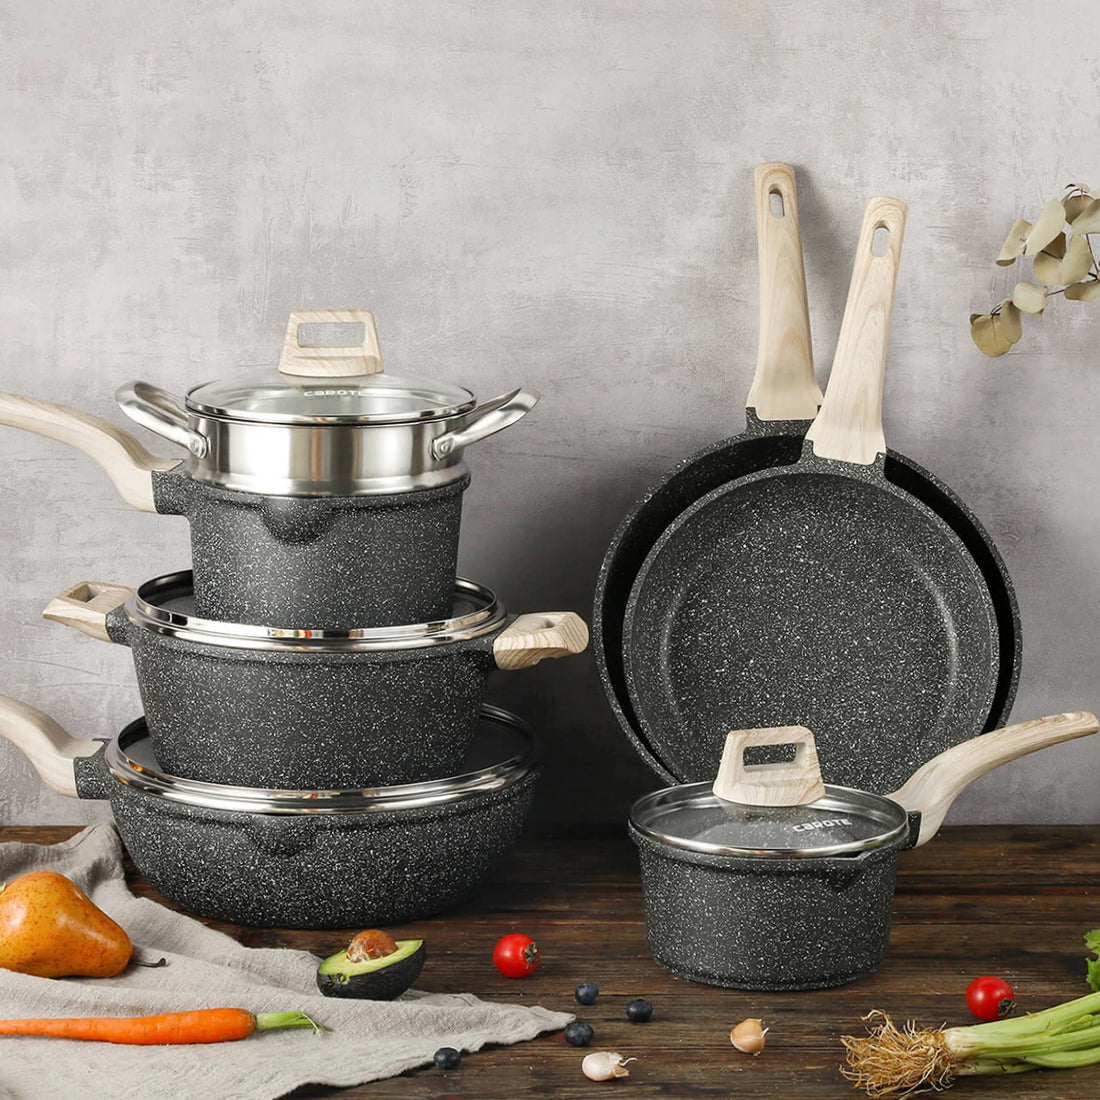 Carote Nonstick Granite Cookware Sets 10 Pcs Stone Cookware Set,non stick  frying pan set , pots and pans set ( Granite, induction cookware), Granite  Classic Black Set